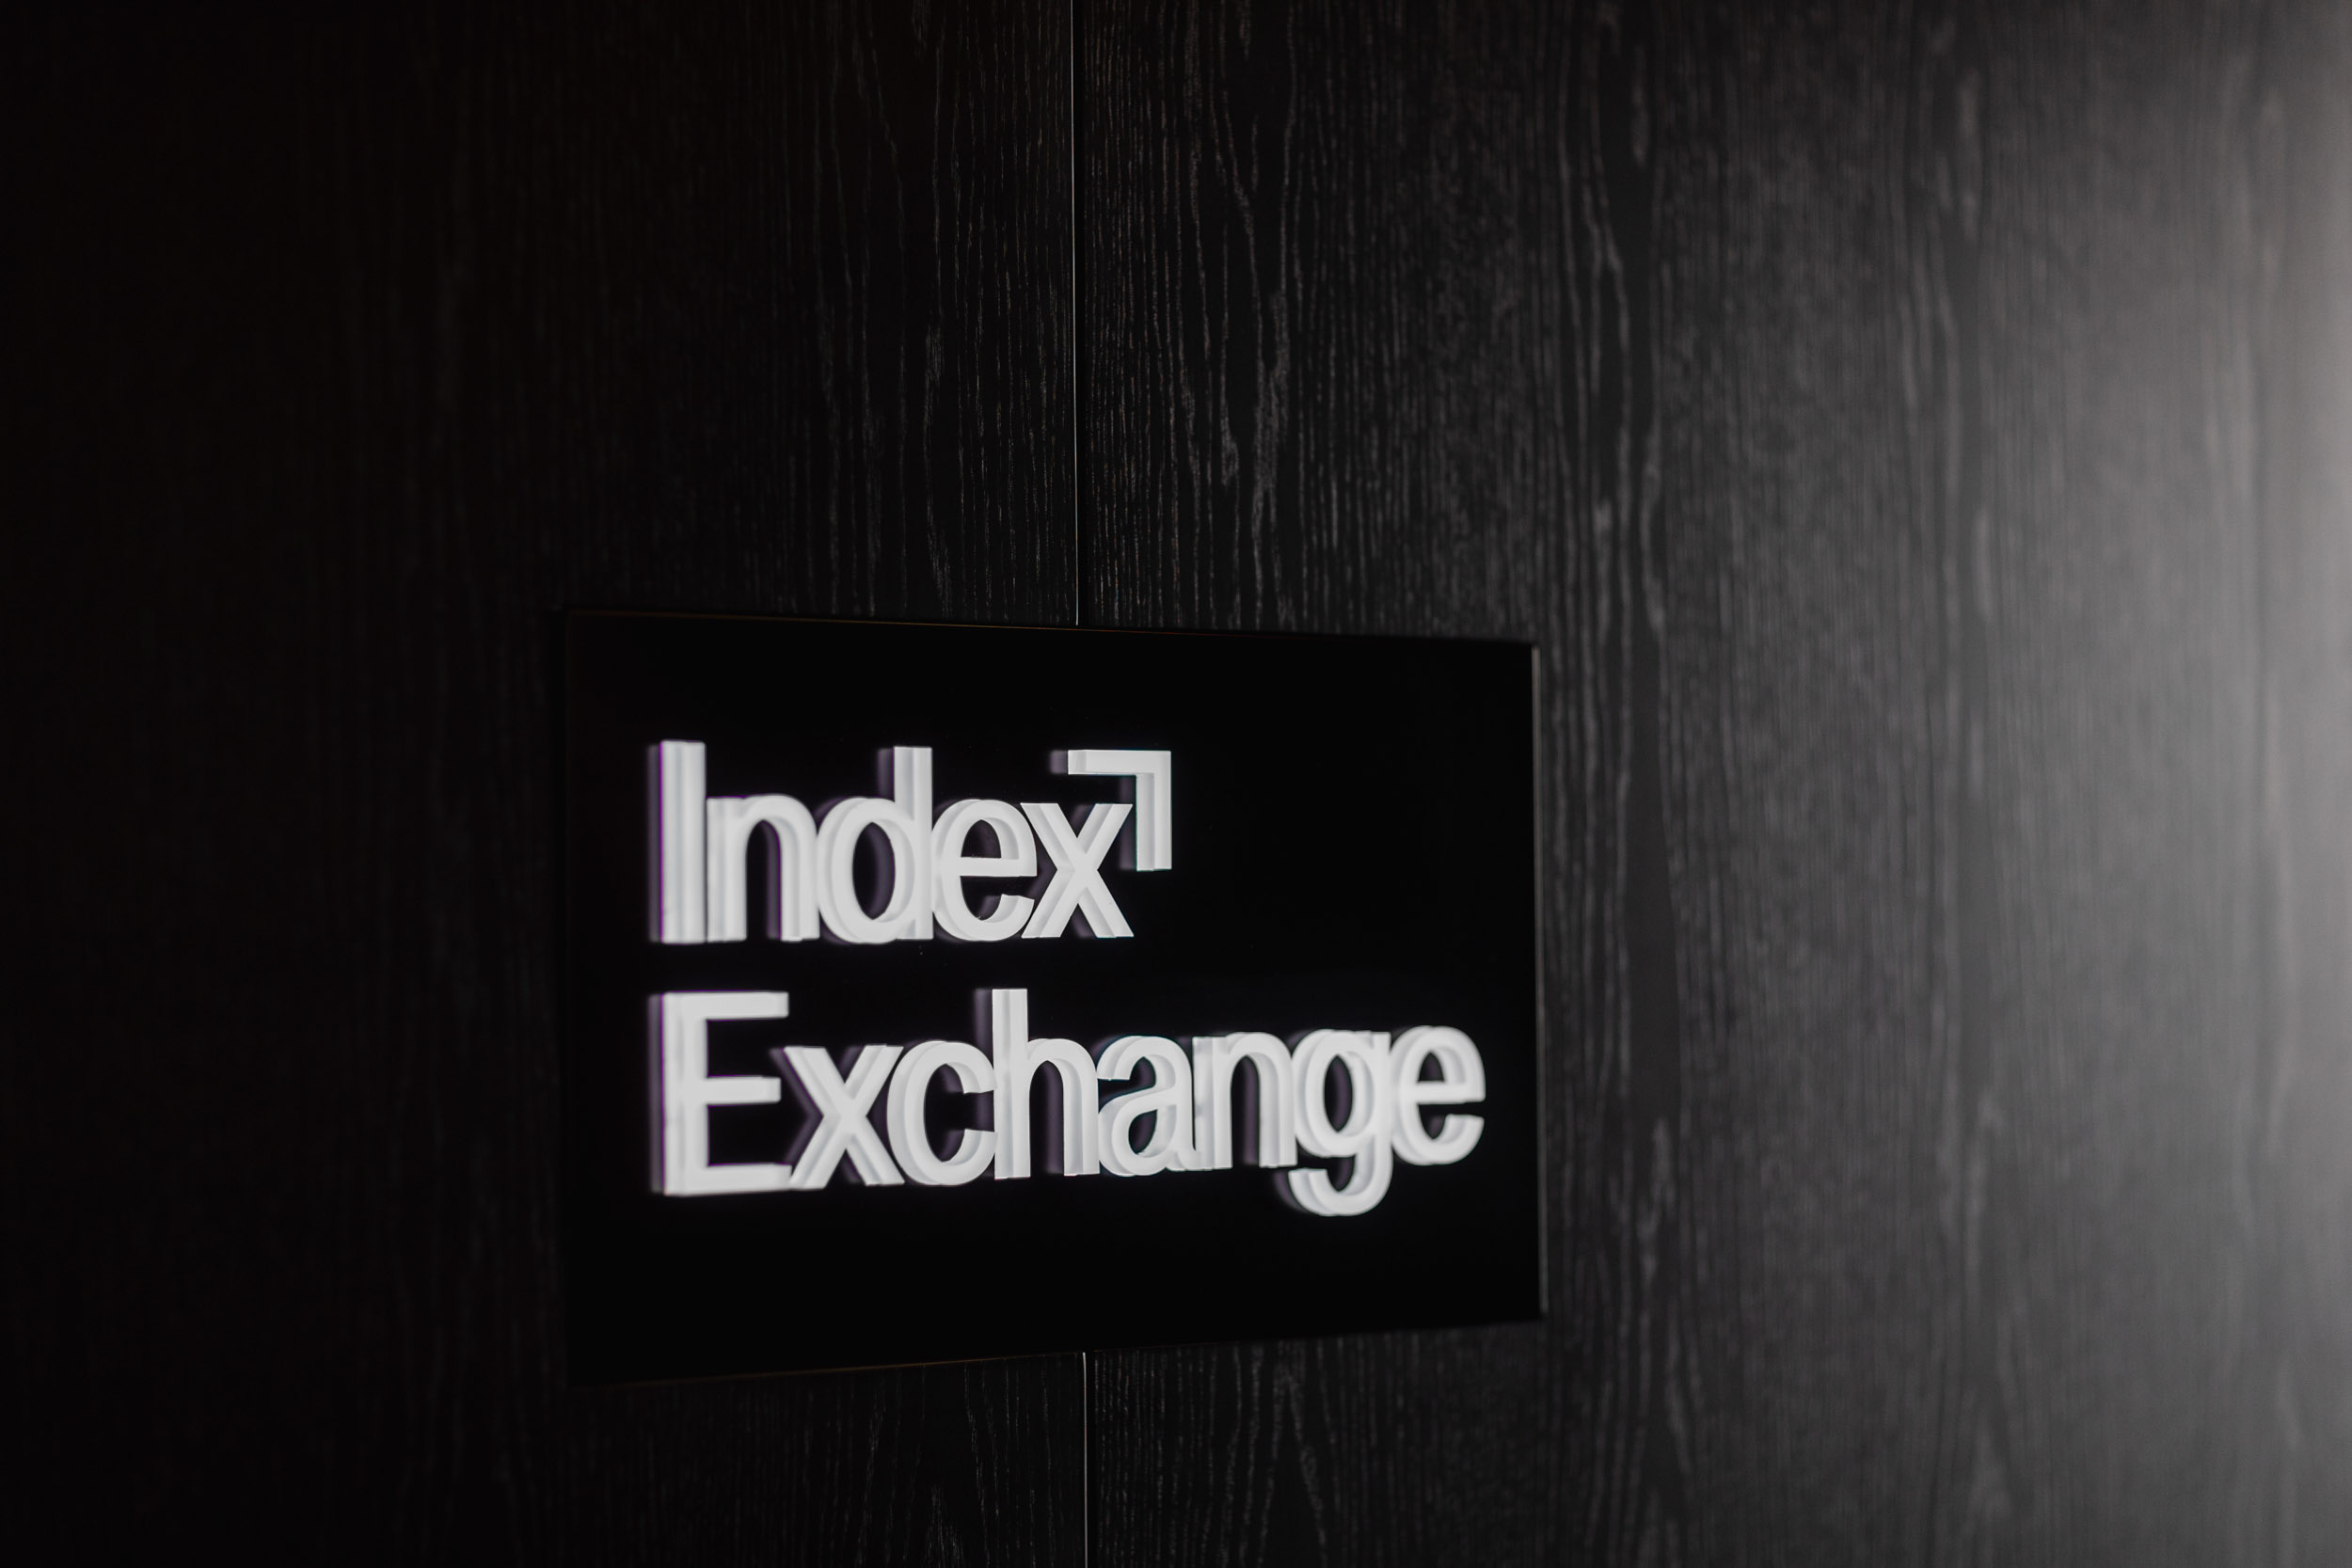 Index Exchange logo on black wall.